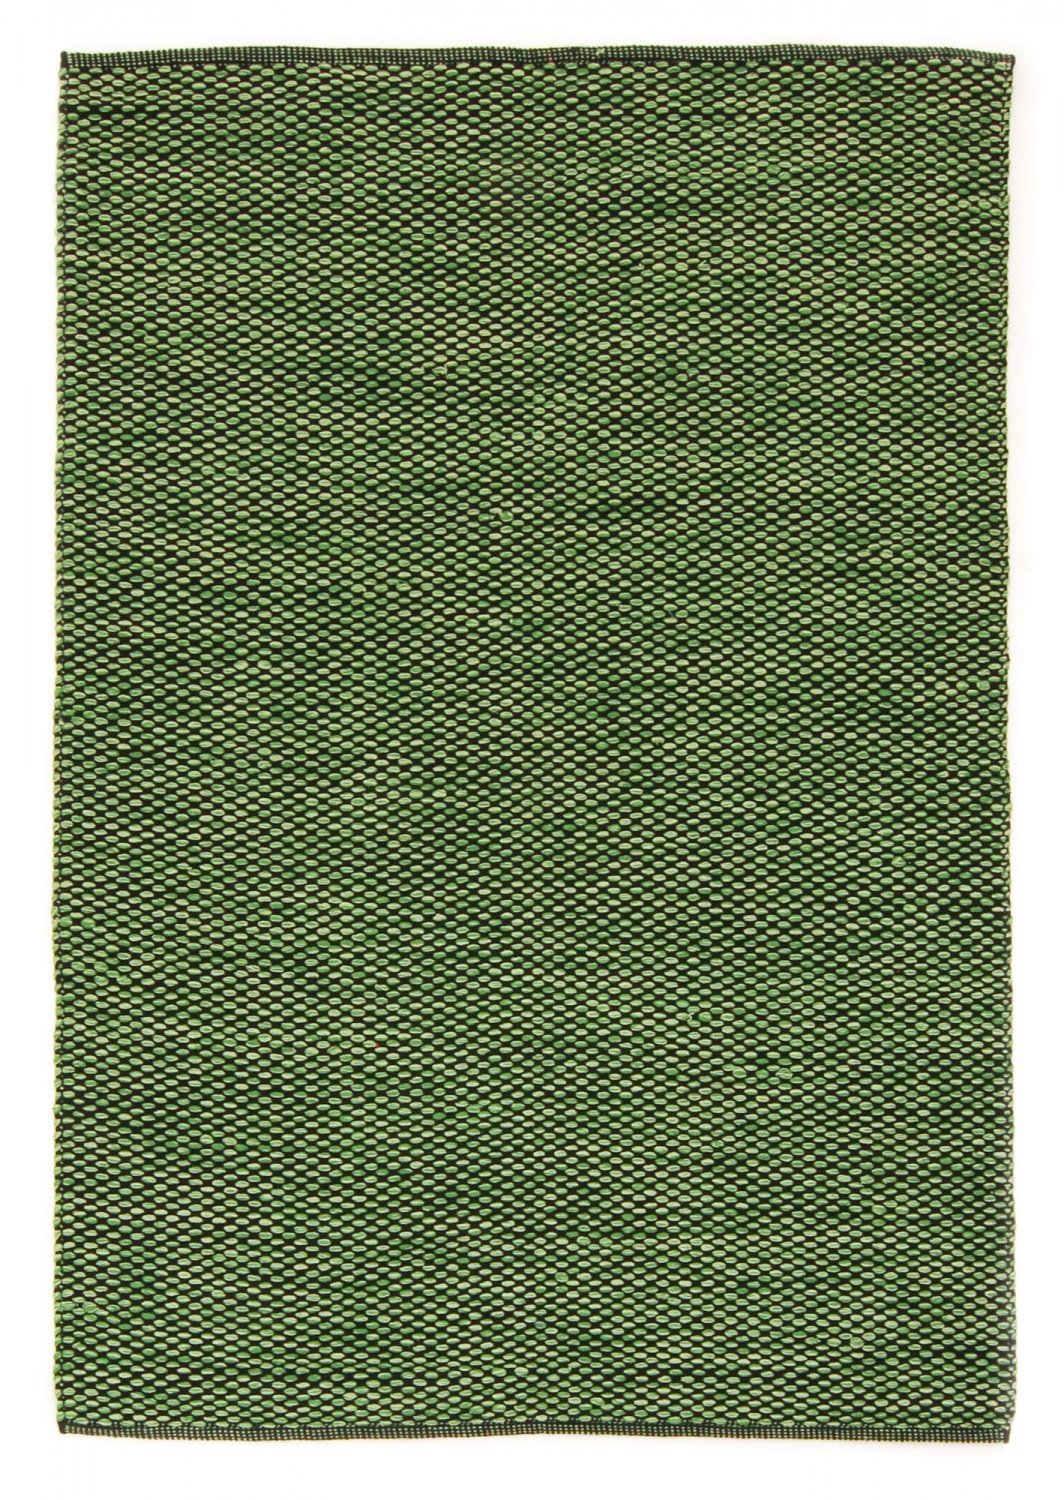 Kludetæppe - Tuva (grøn)